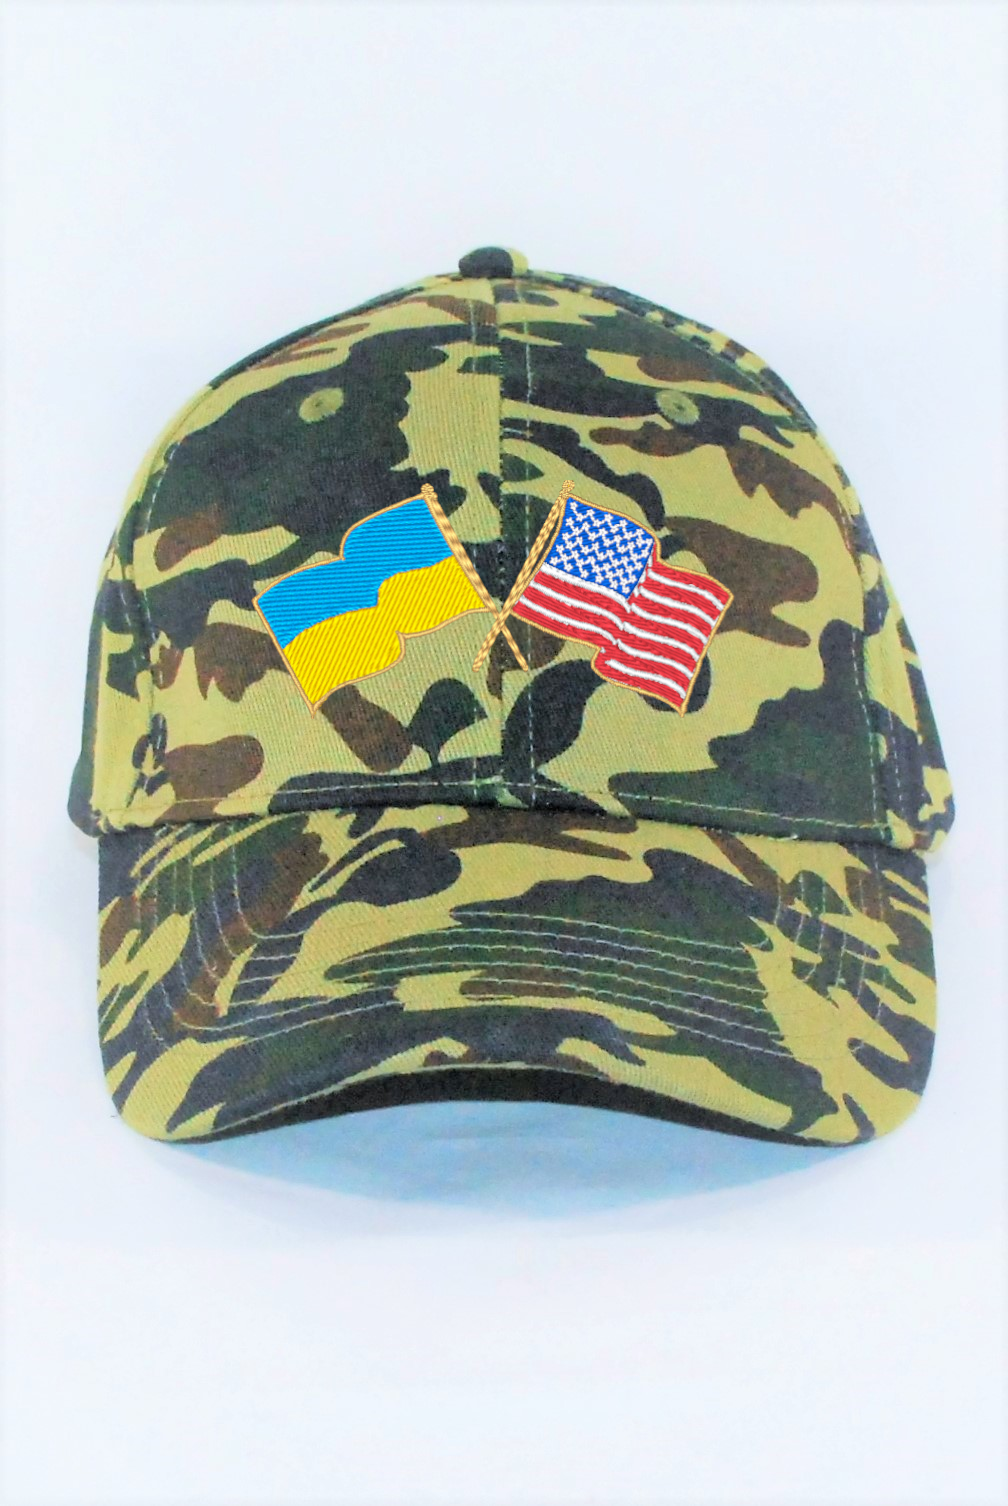 Embroidered bill cap "Ukrainian-American"